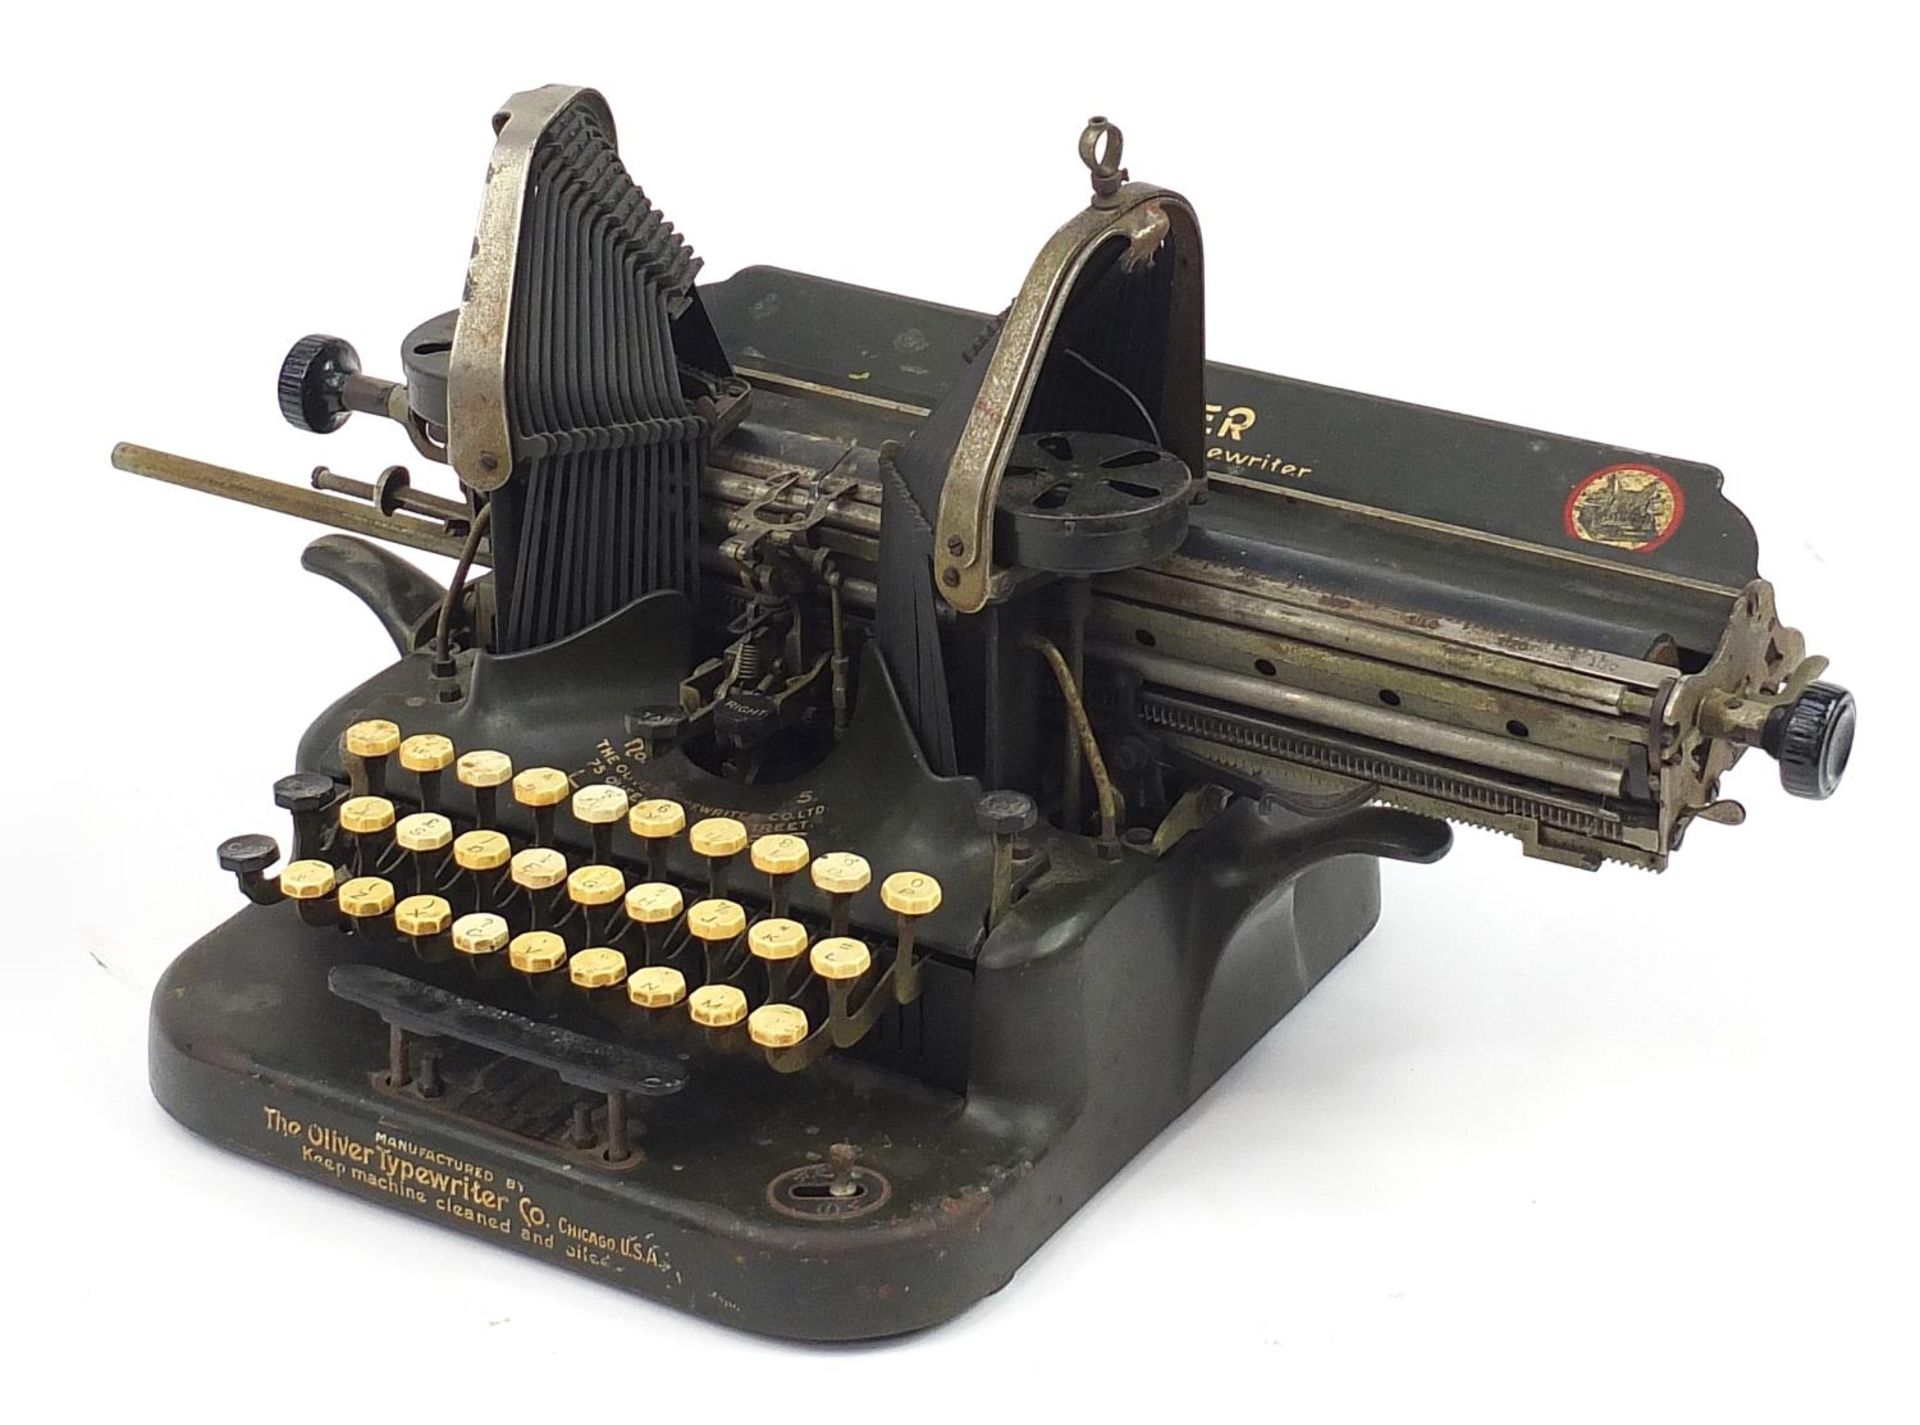 Vintage Oliver no5 typewriter